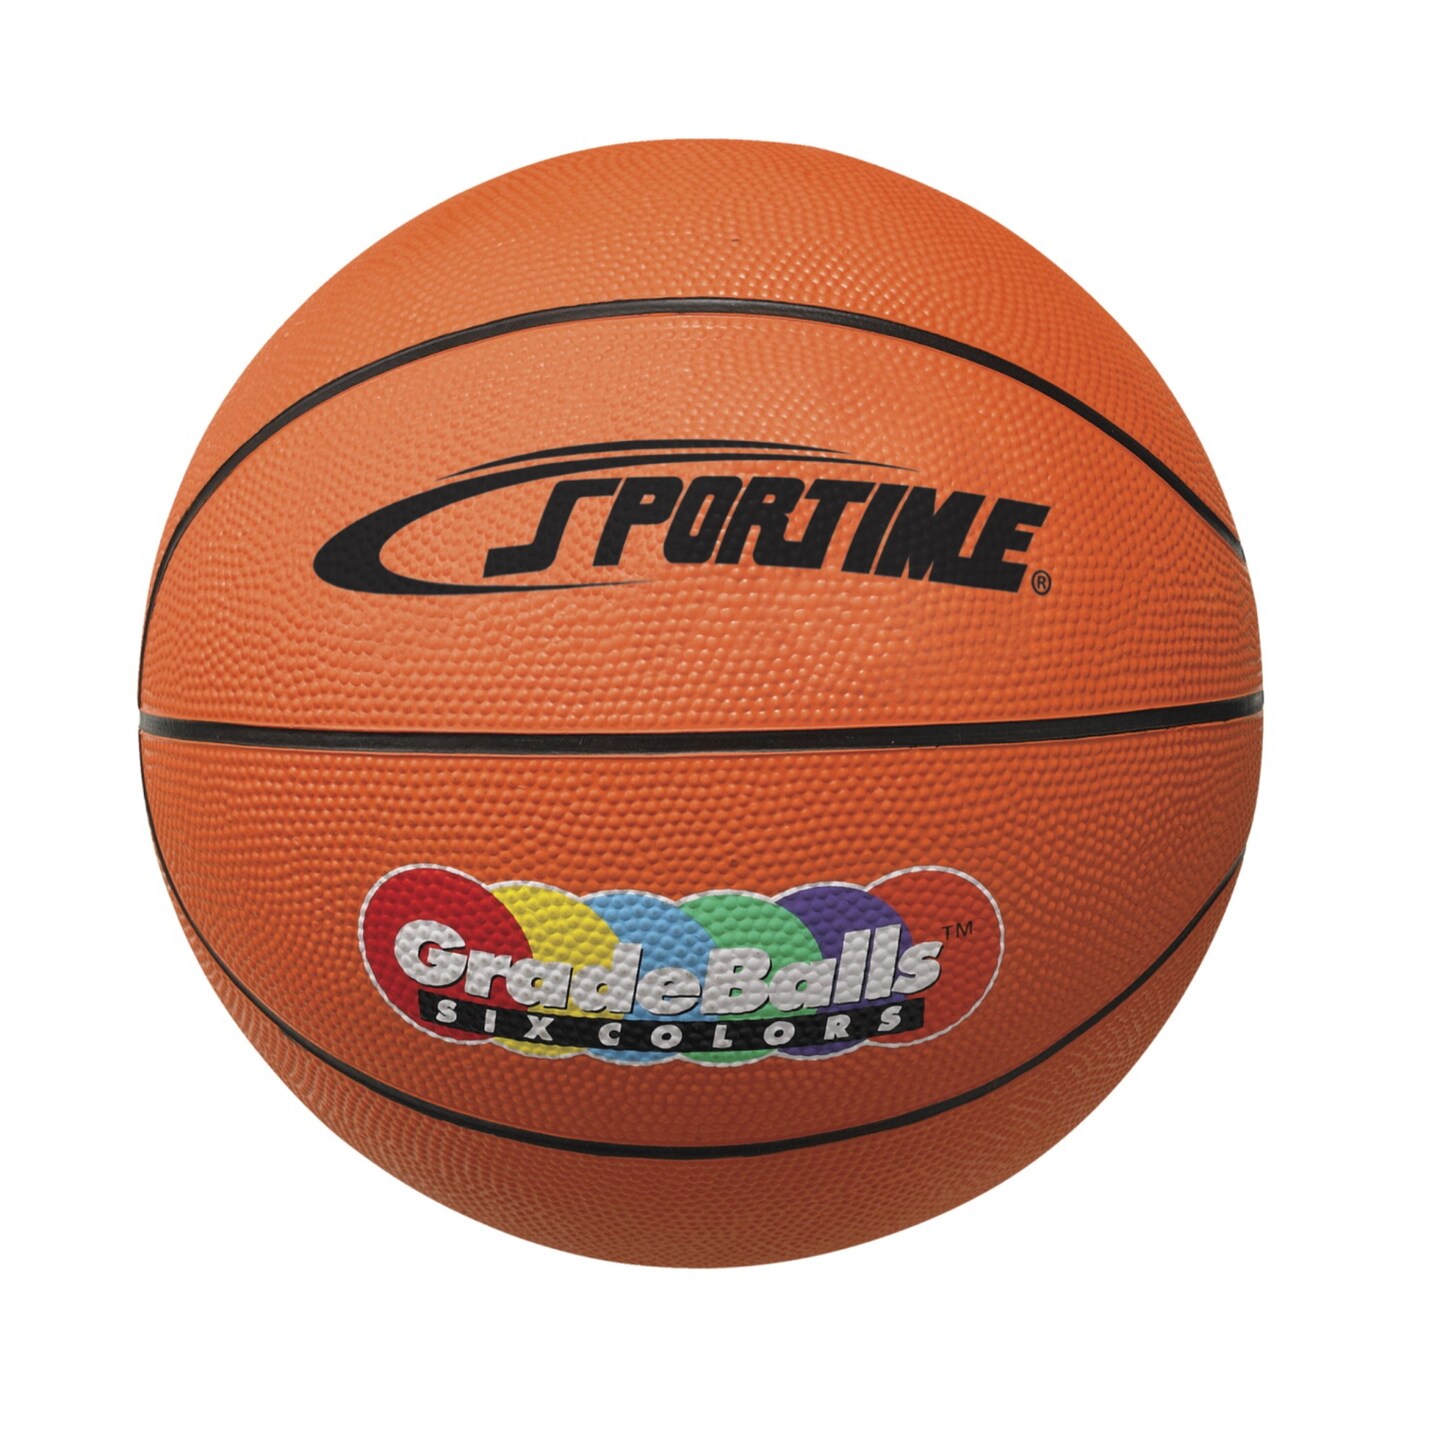 Sportime 27 Inch Gradeball Rubber Junior Basketball, Orange | Arts ...